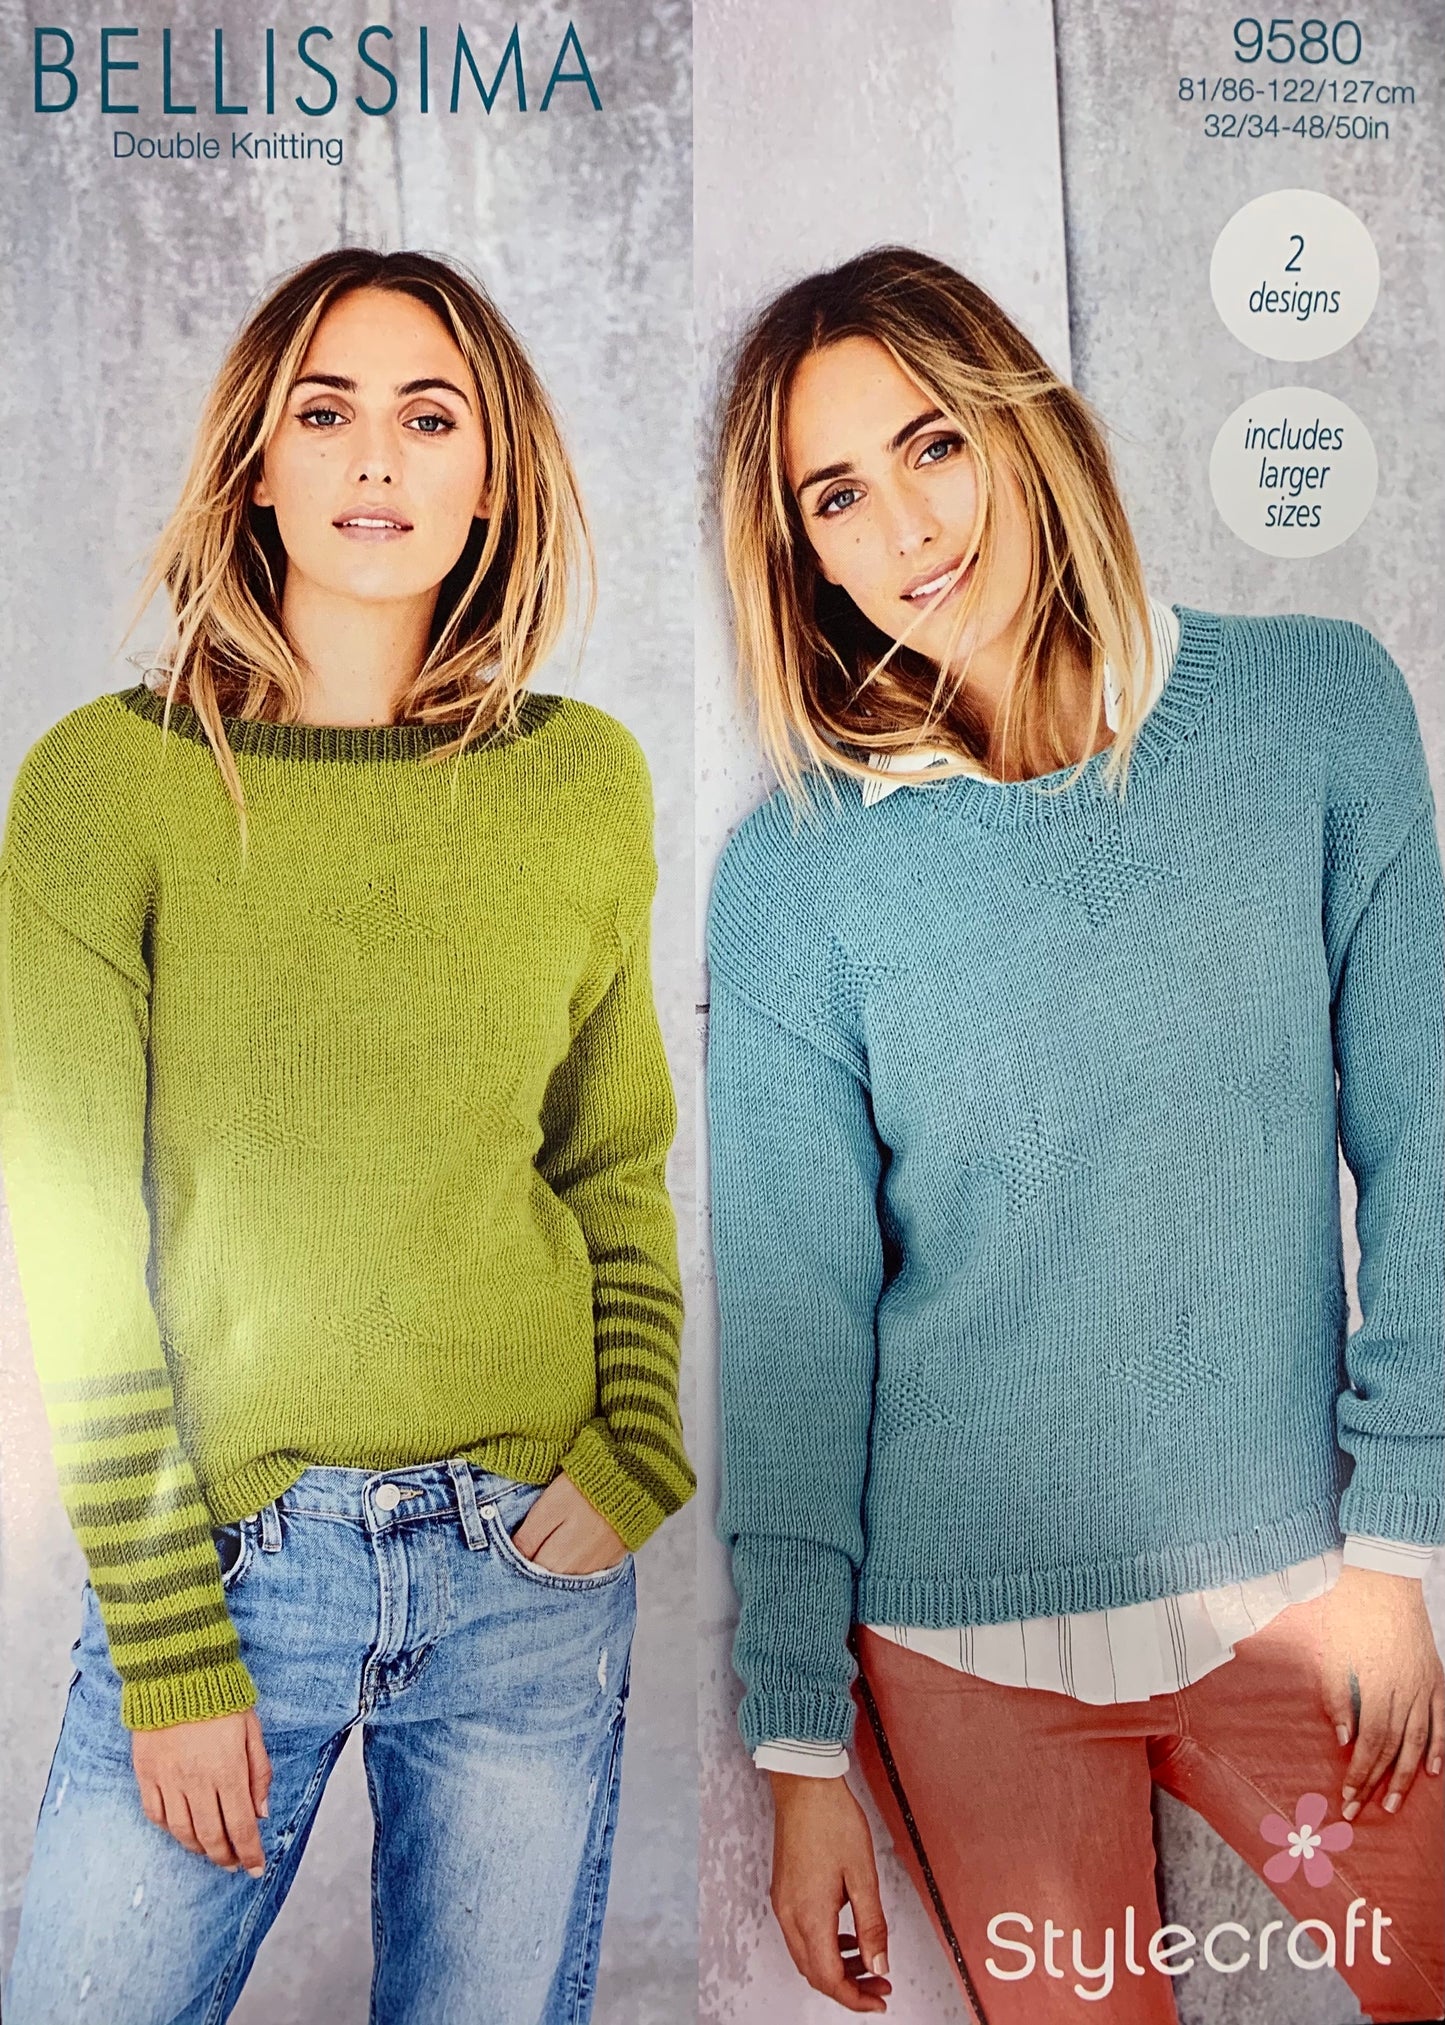 9580 Stylecraft Bellissima dk ladies sweaters knitting pattern